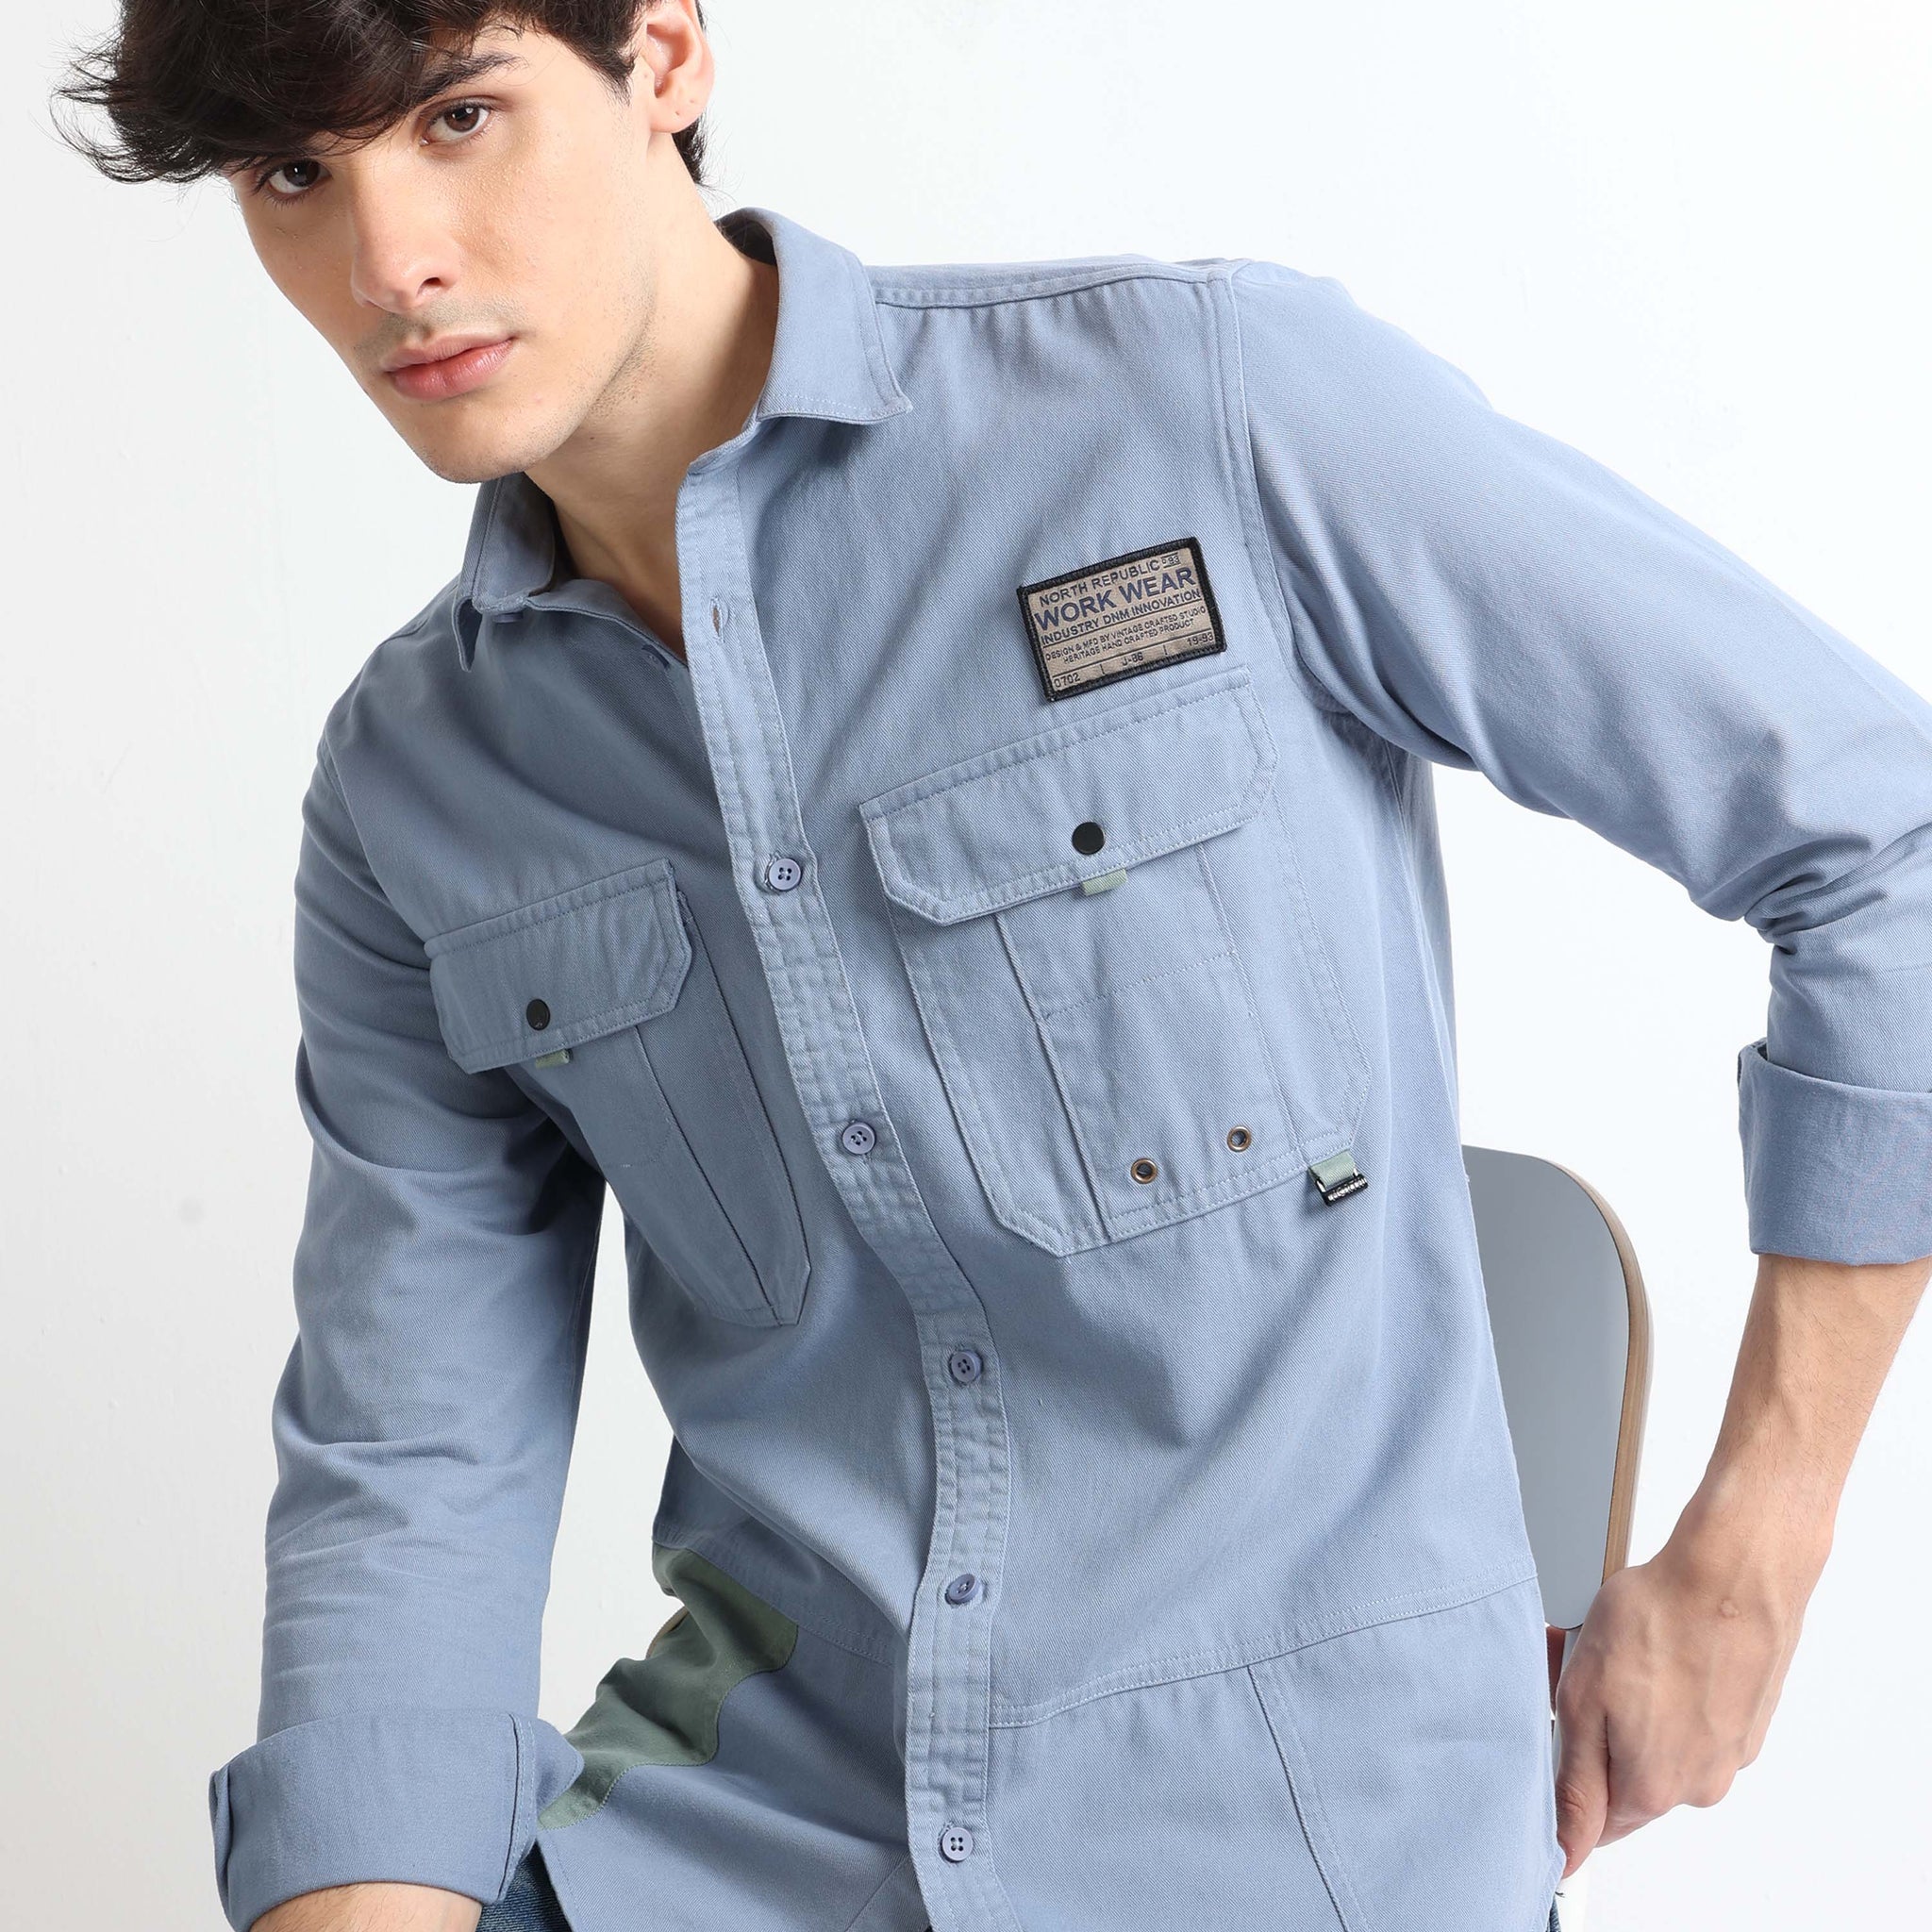 Blue Double Pocket Twill Workwear Men's Plain Shirt.